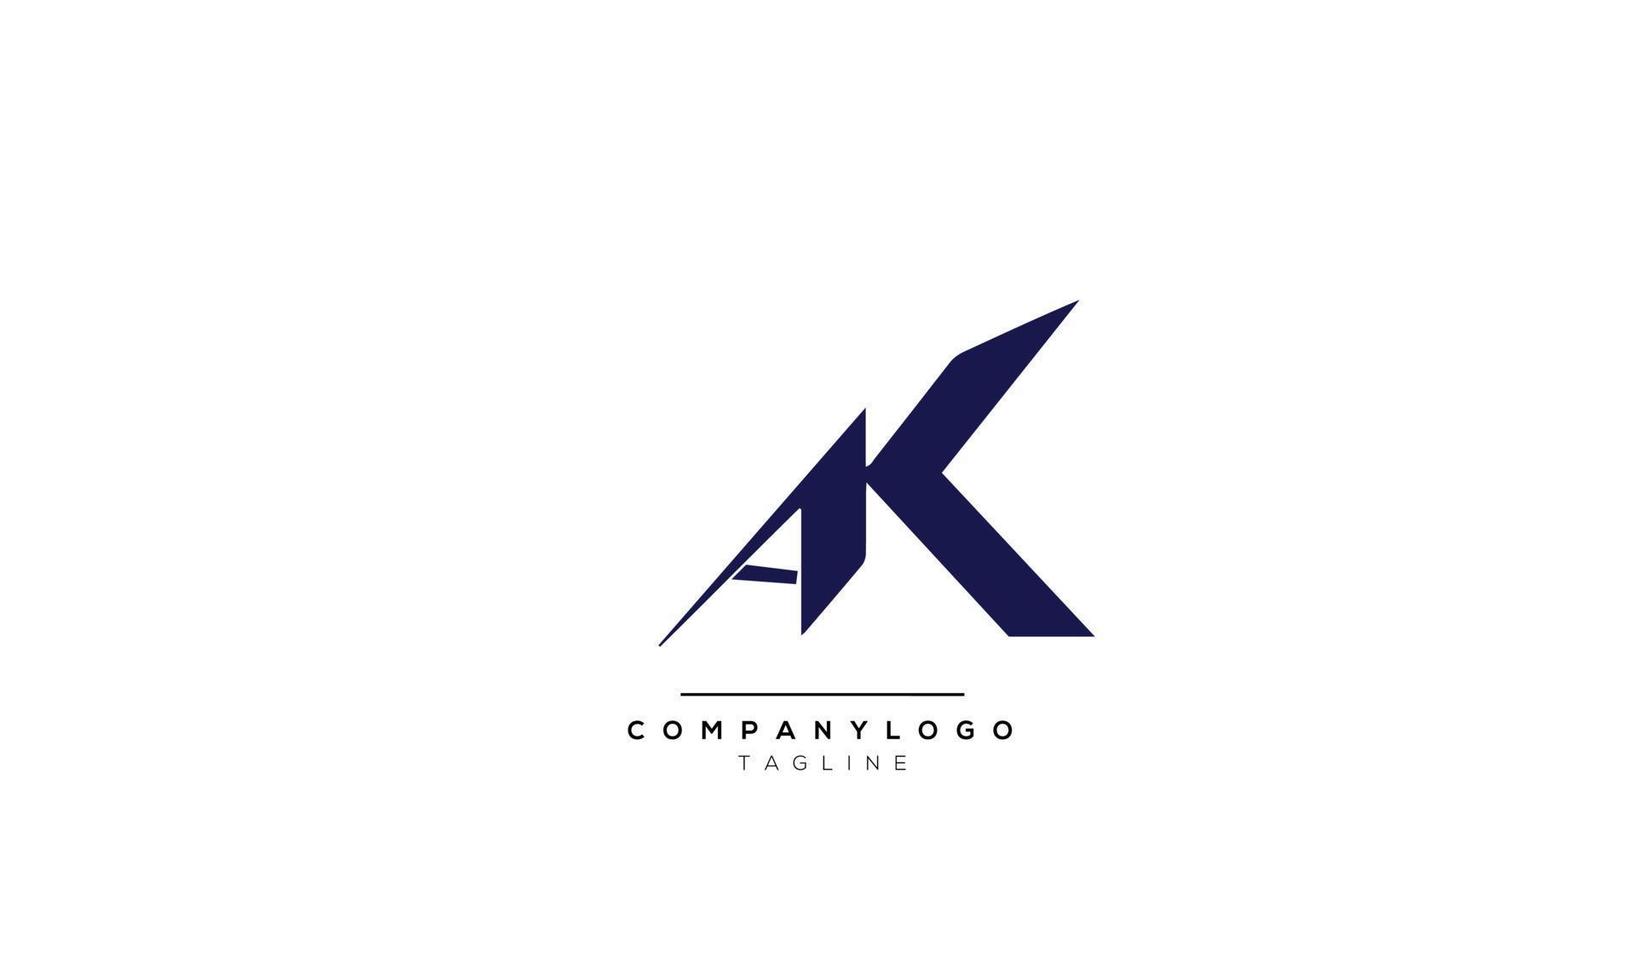 Alphabet letters Initials Monogram logo AK, AK INITIAL, AK letter vector